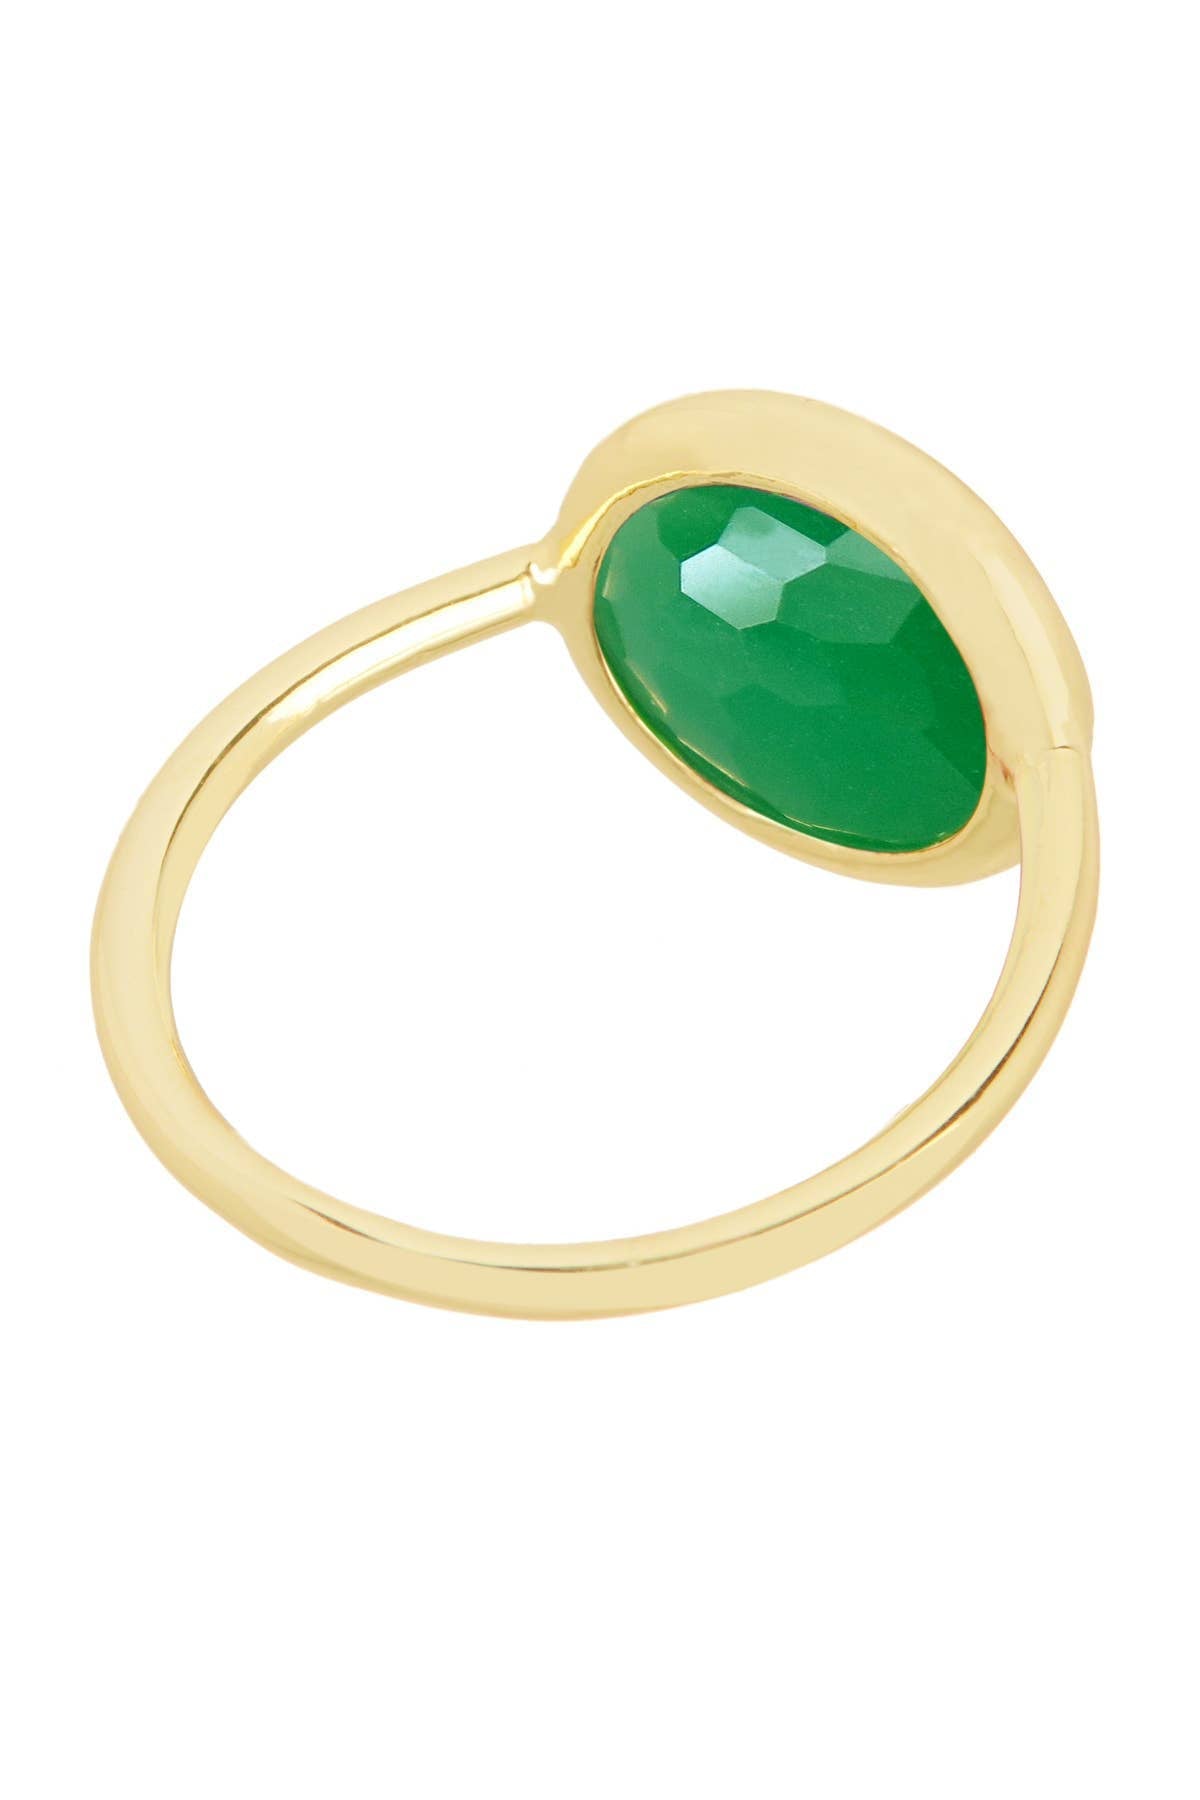 Green Chalcedony Round Ring In 14k - GF